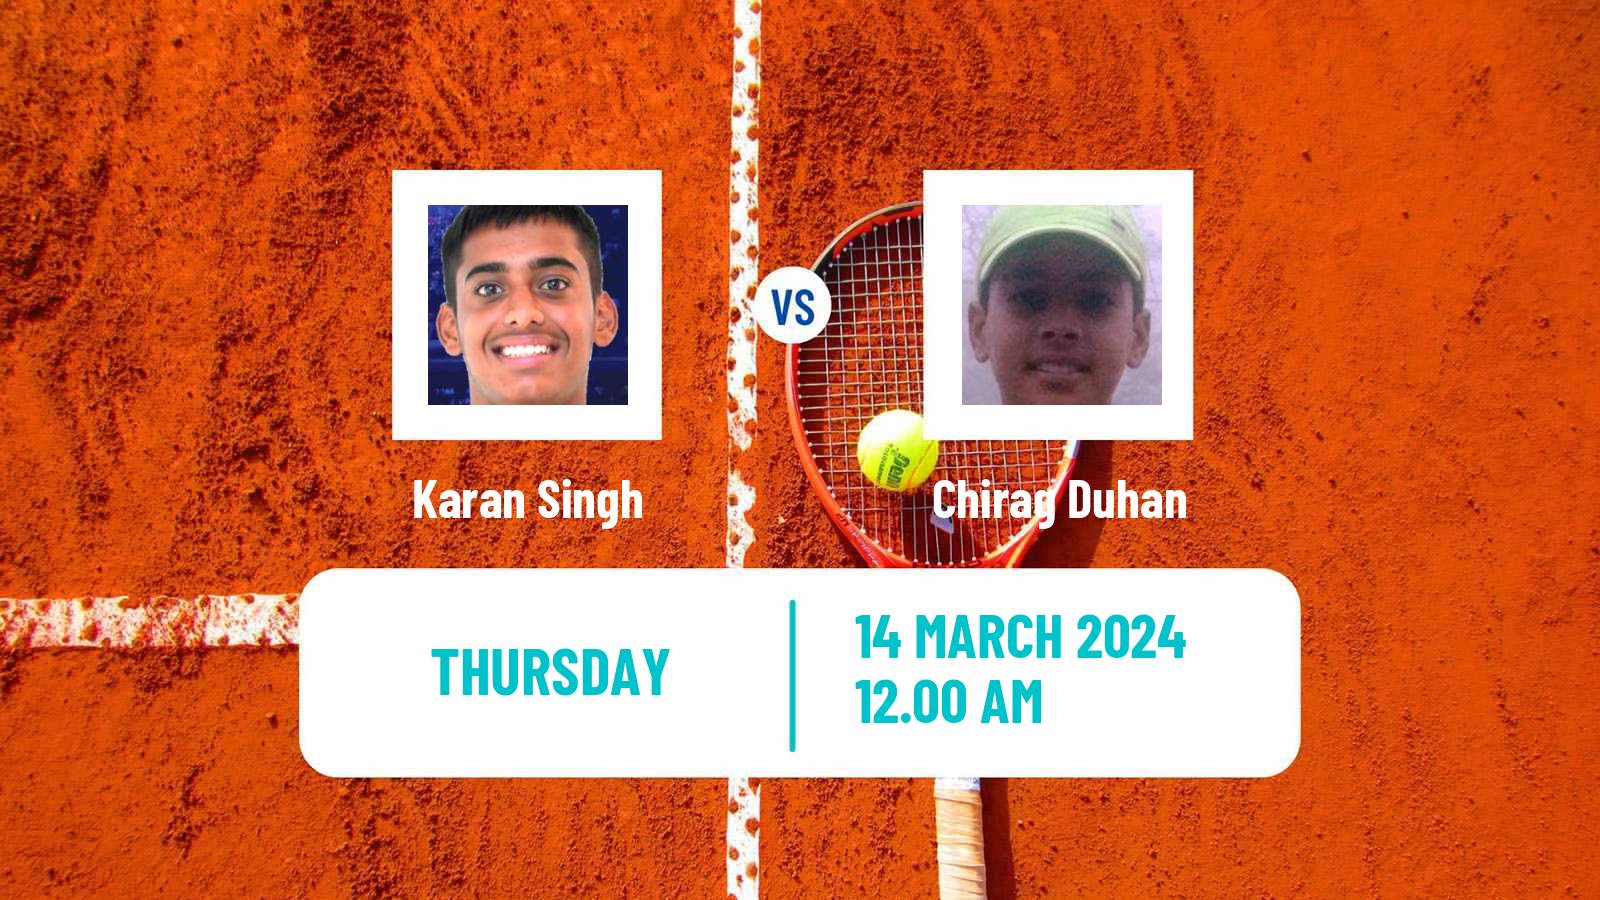 Tennis ITF M25 New Delhi Men Karan Singh - Chirag Duhan